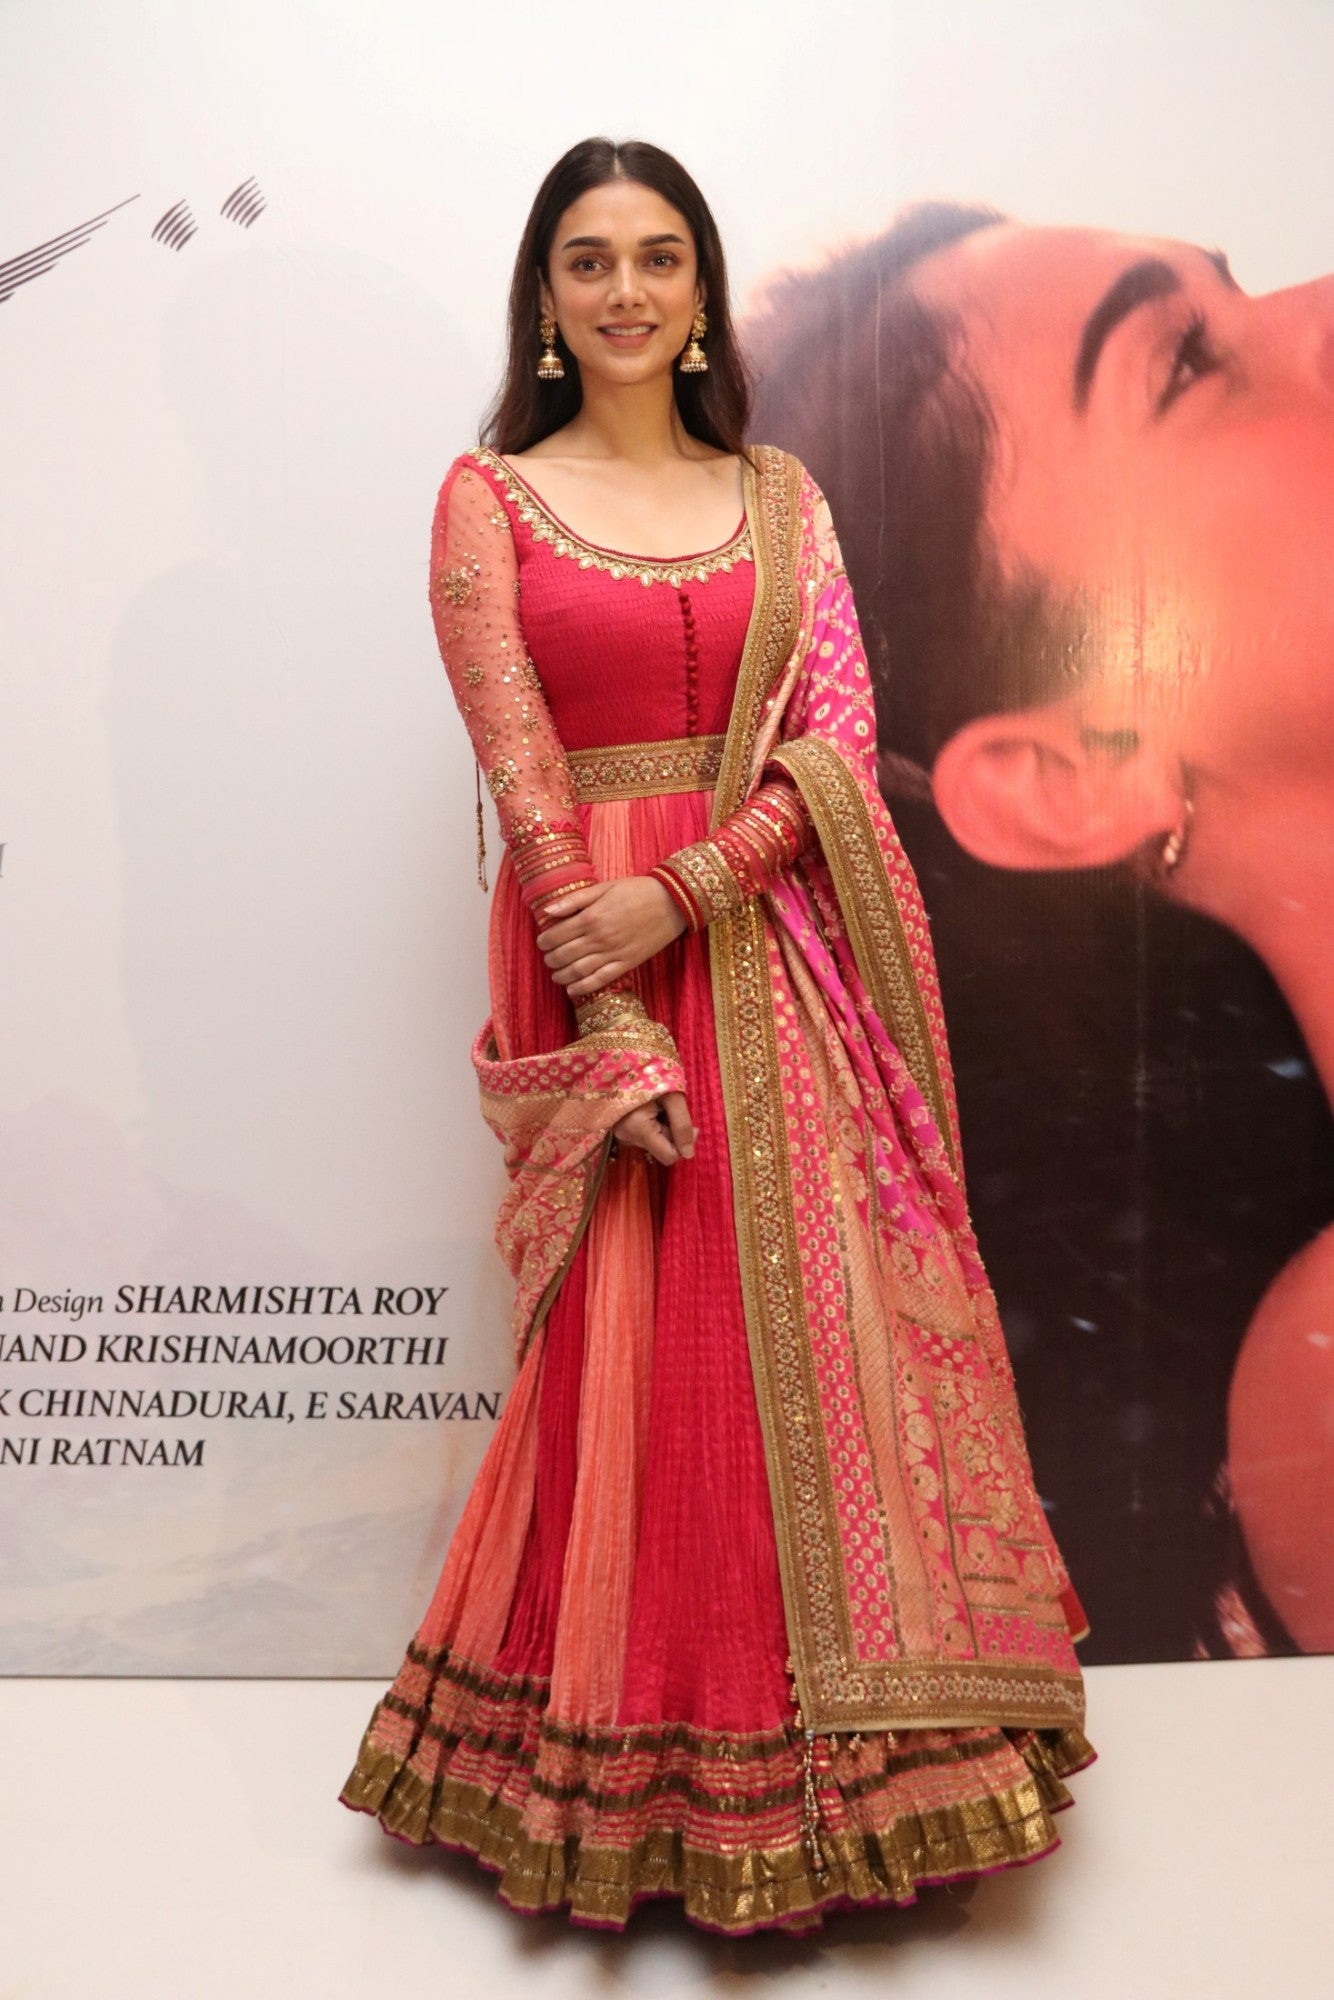 Aditi Rao Hydari in red & pink color Floor Length Crushed Anarkali Suit Indian Ethnic Wear at her upcoming movie Kaatru Veliyidai audio Launch event  